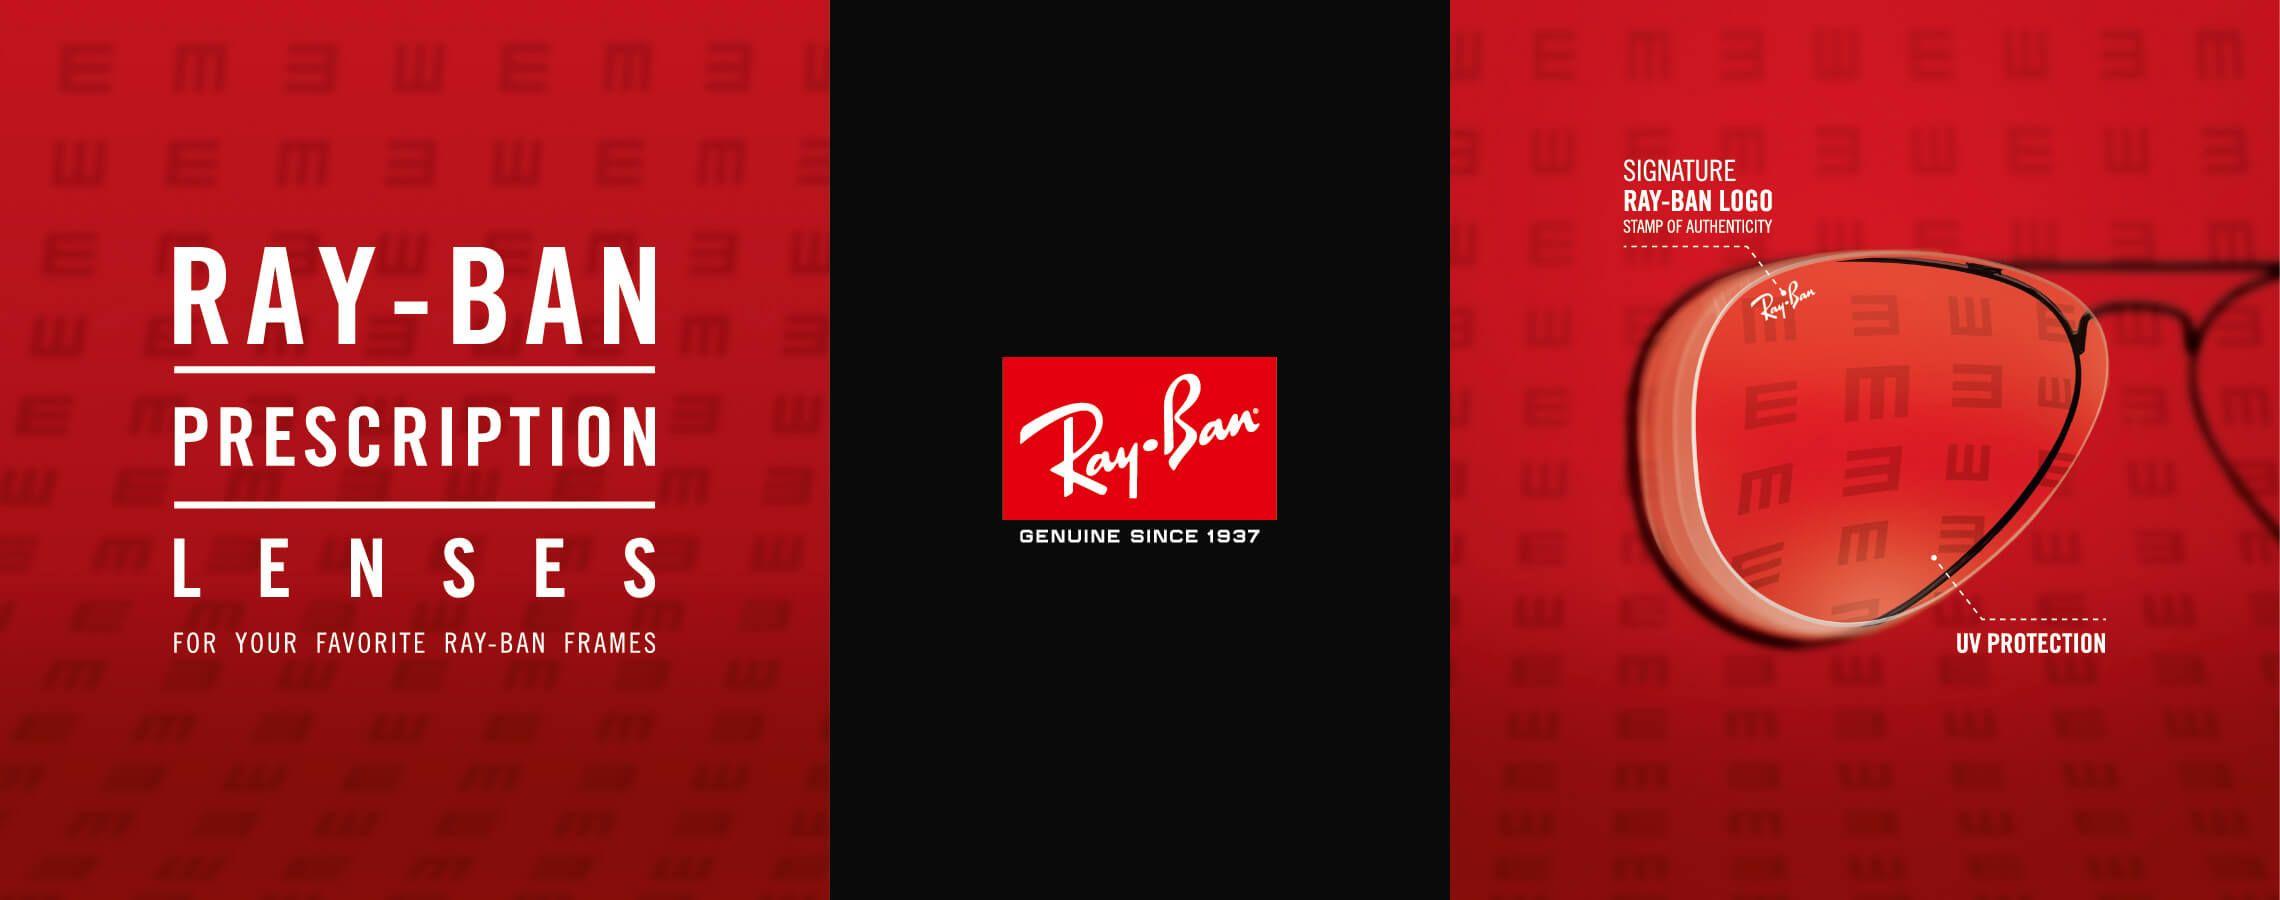 Ray-Ban Logo - New Ray-Ban prescription lenses now available - David Clulow